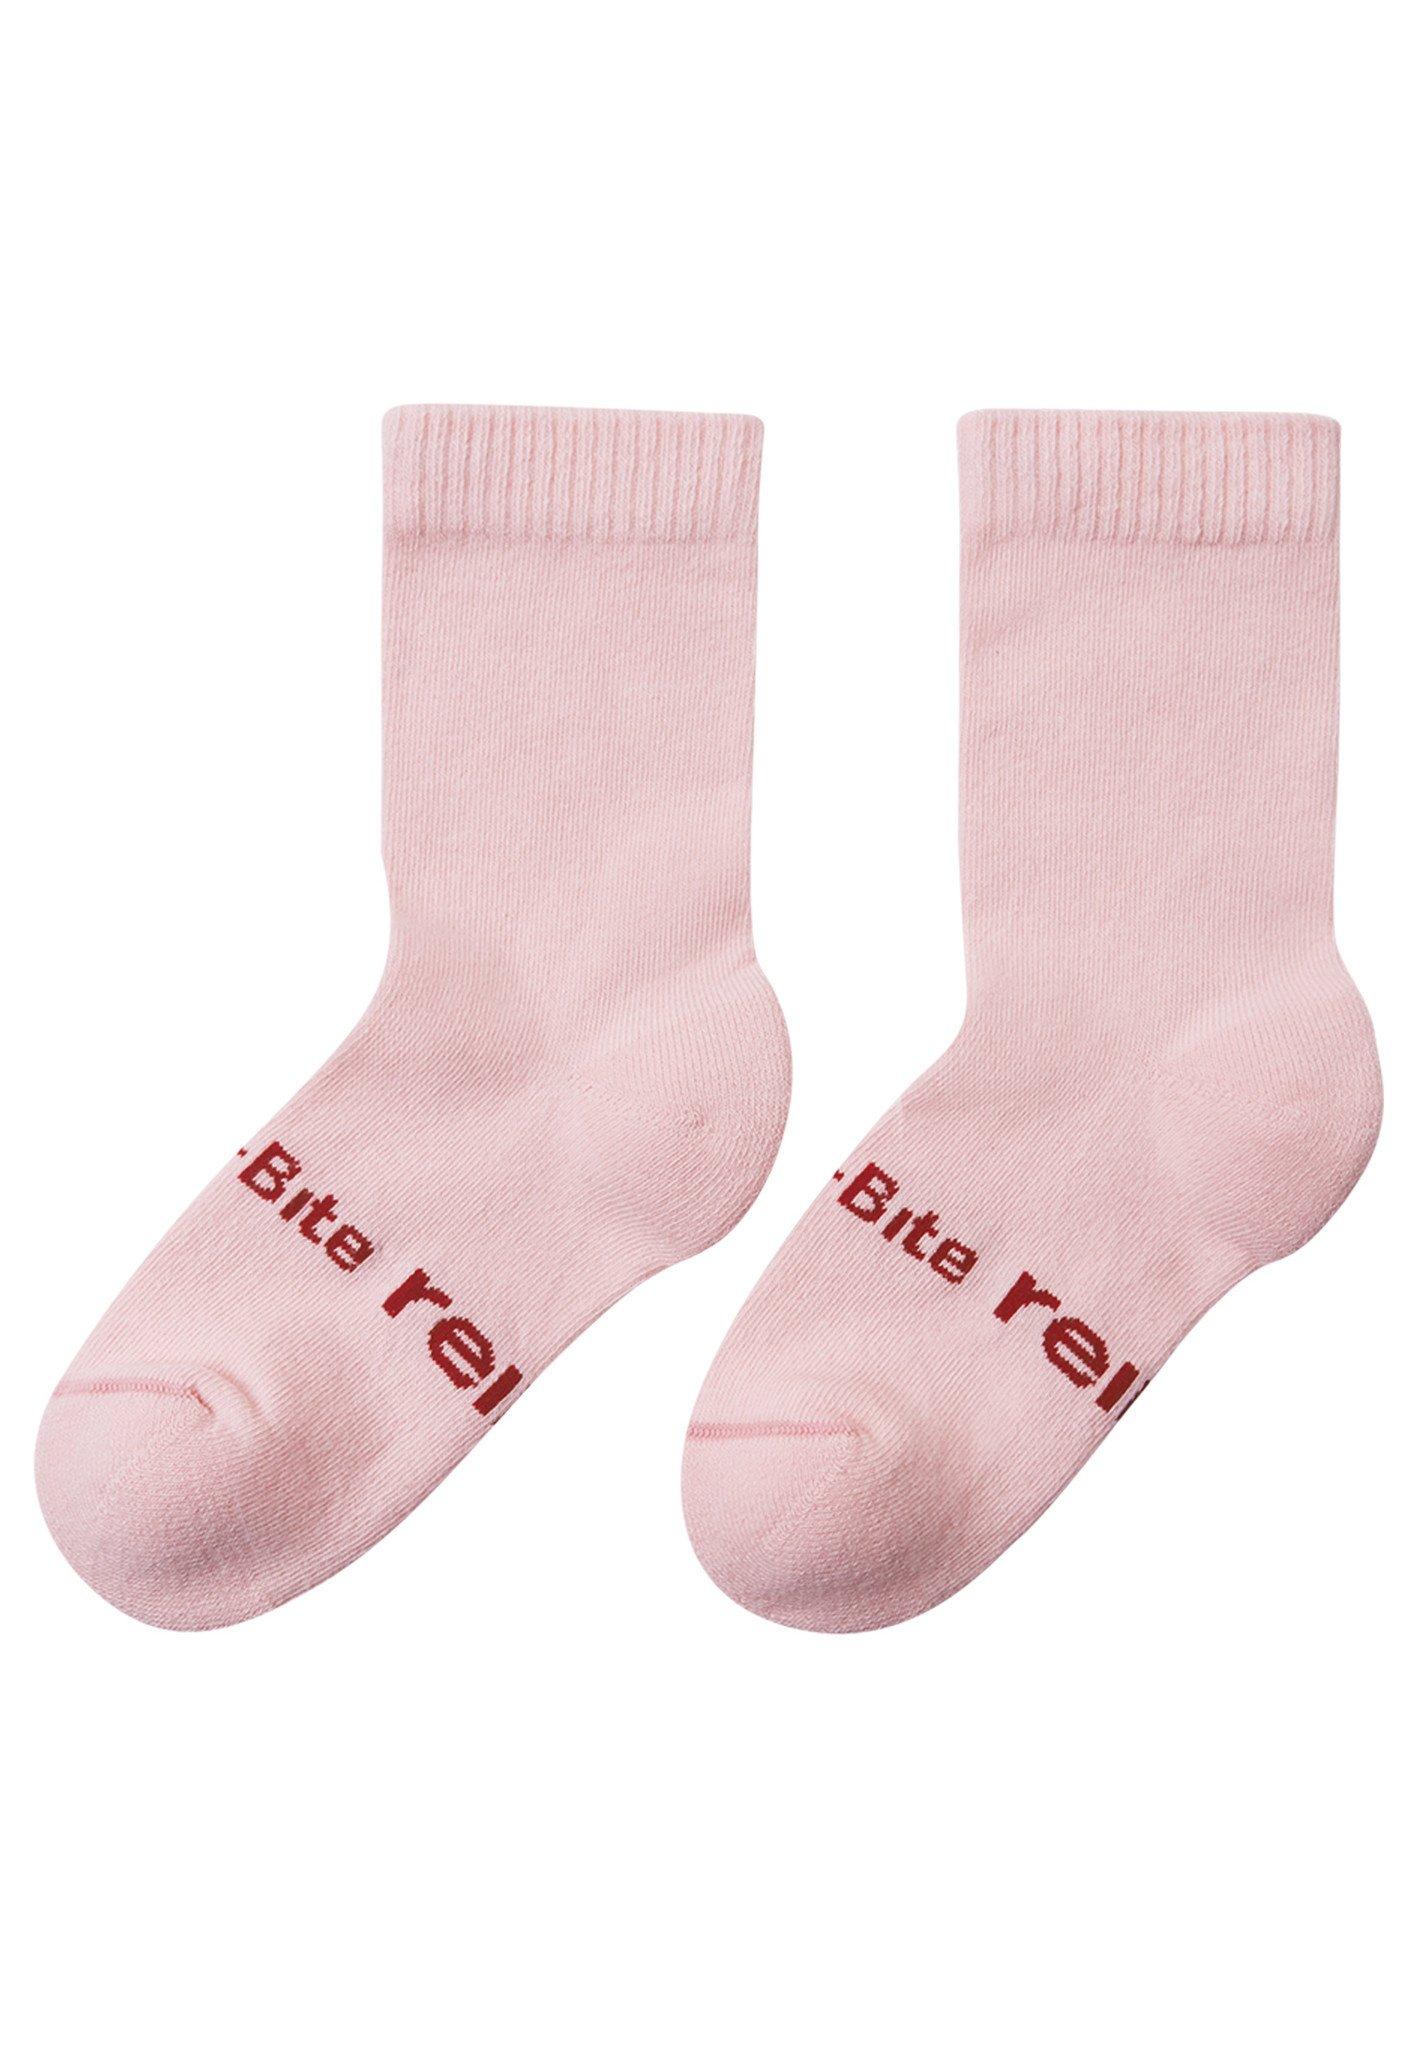 Kinder Anti-bite Socken Insect Pale Rose Unisex Rosa 22/25 von Reima